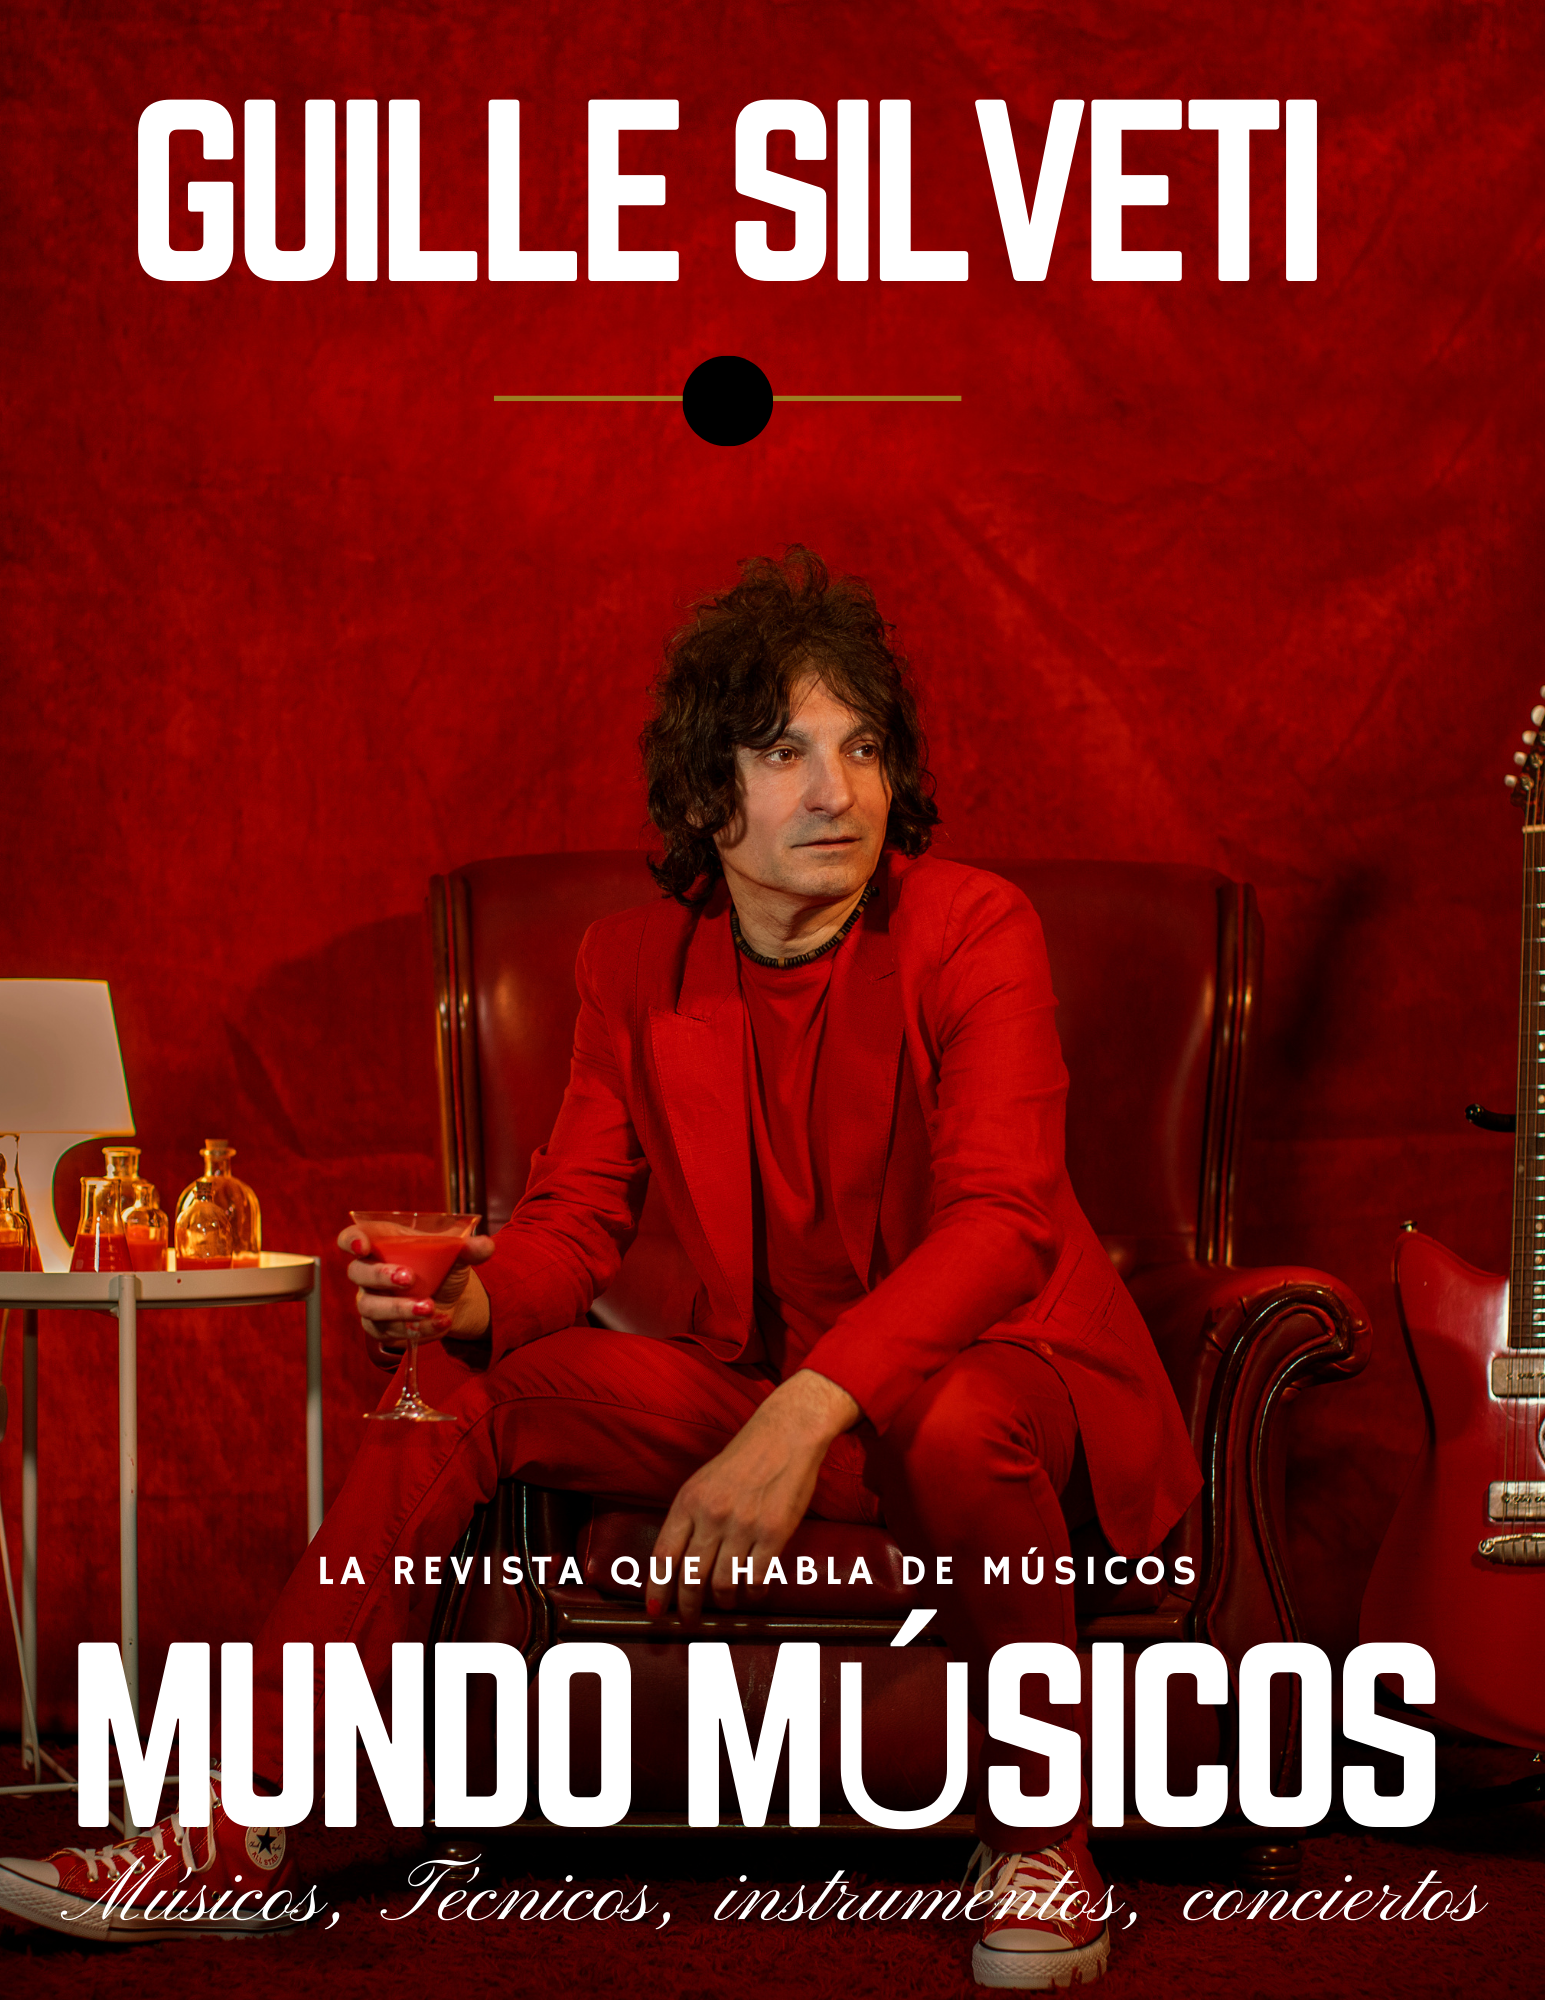 Guille Silveti, guitarrista, cantante y compositor